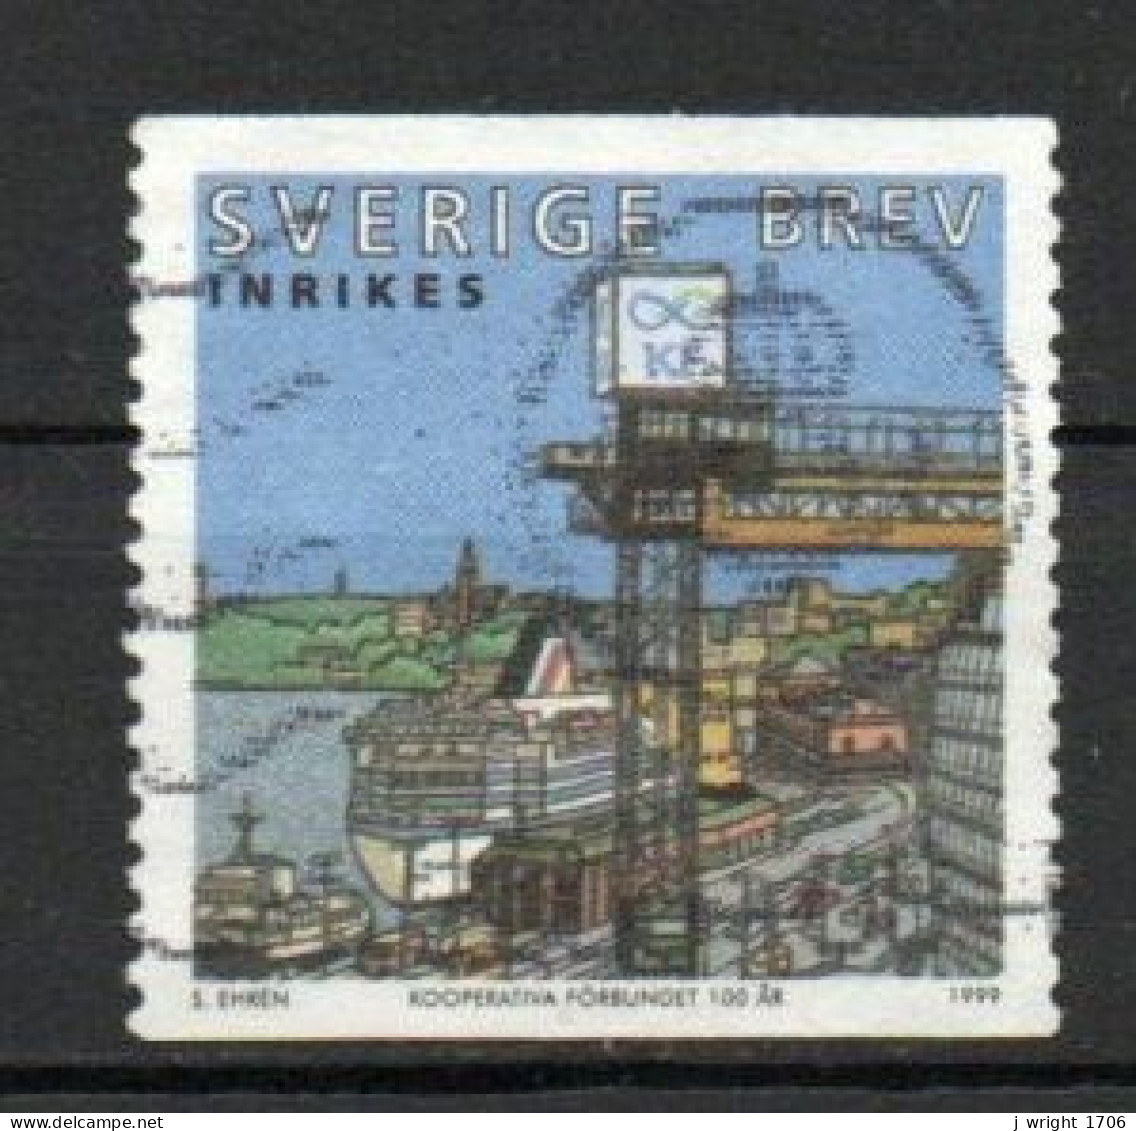 Sweden, 1999, Co-operative Union Centenary, Letter, USED - Gebruikt